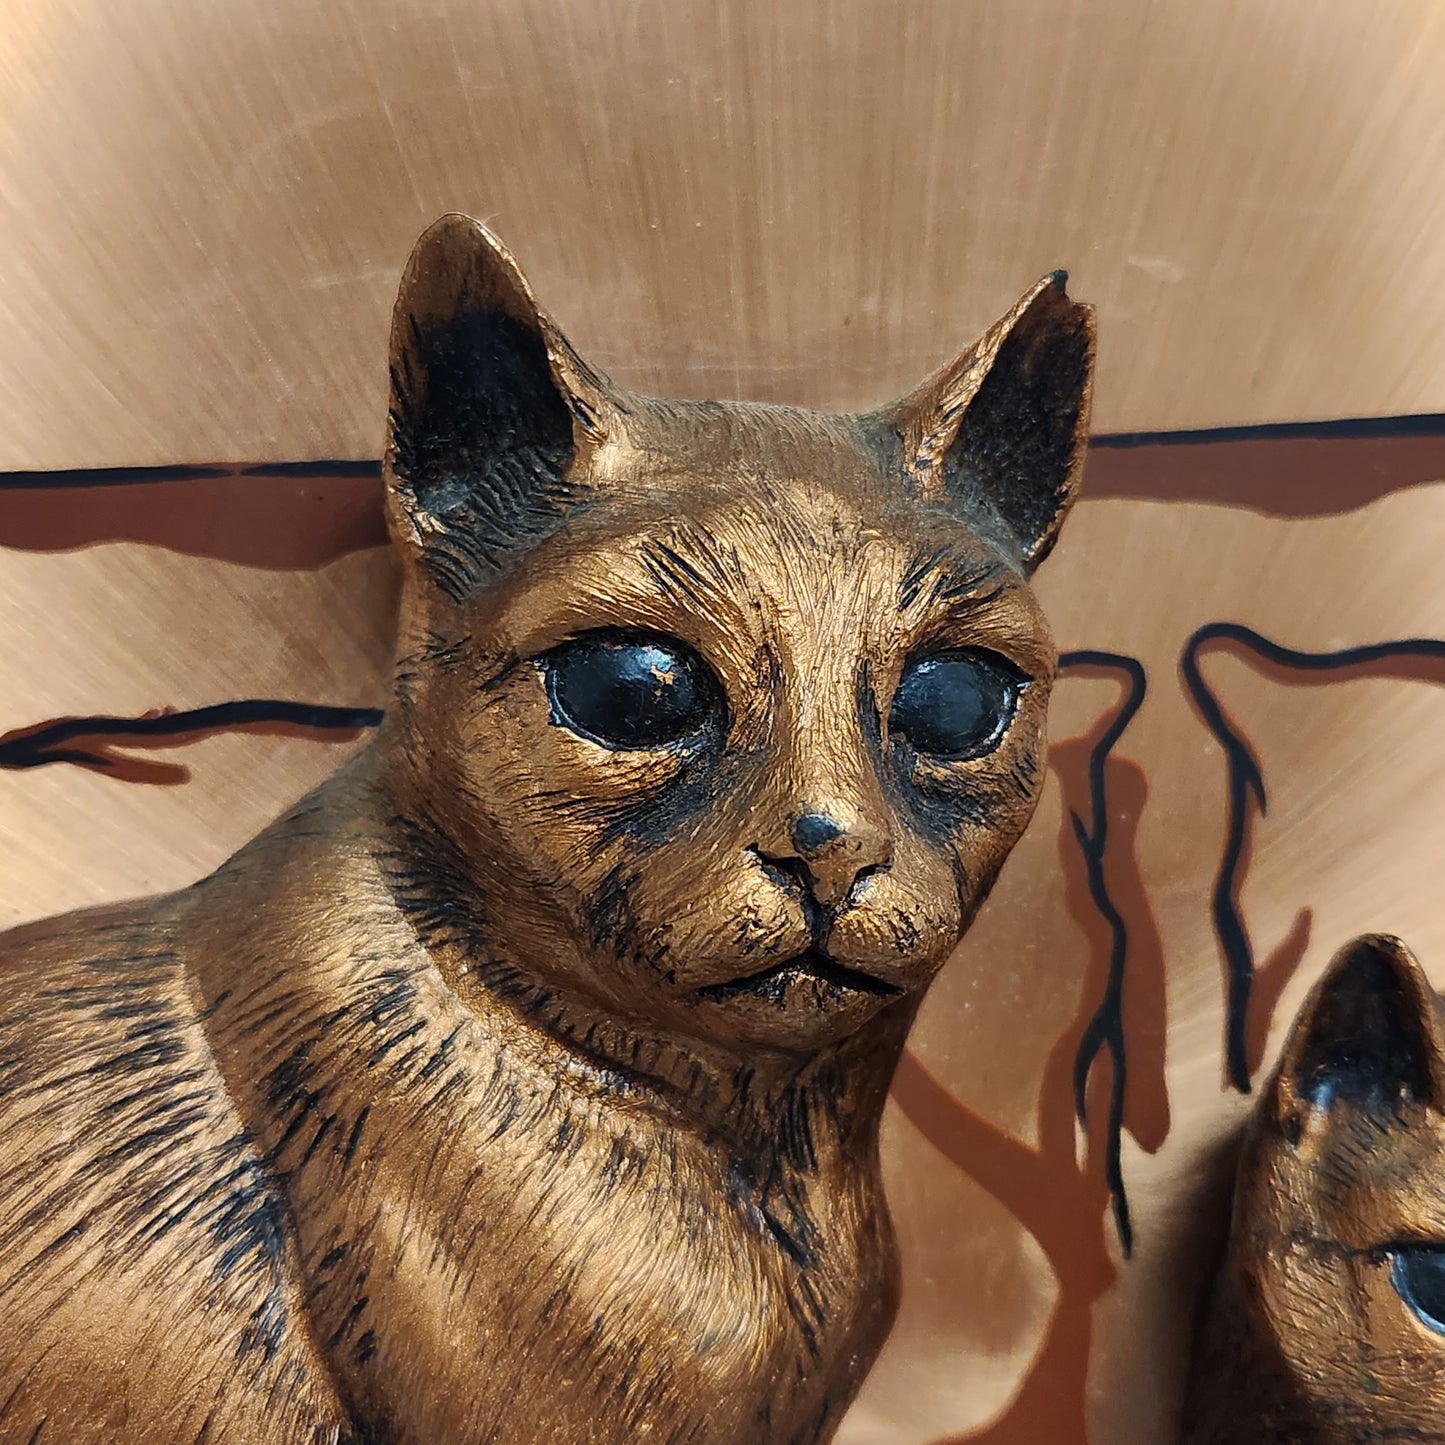 Vintage Copper & Wood Raised Relief 3D Cat Wall Art